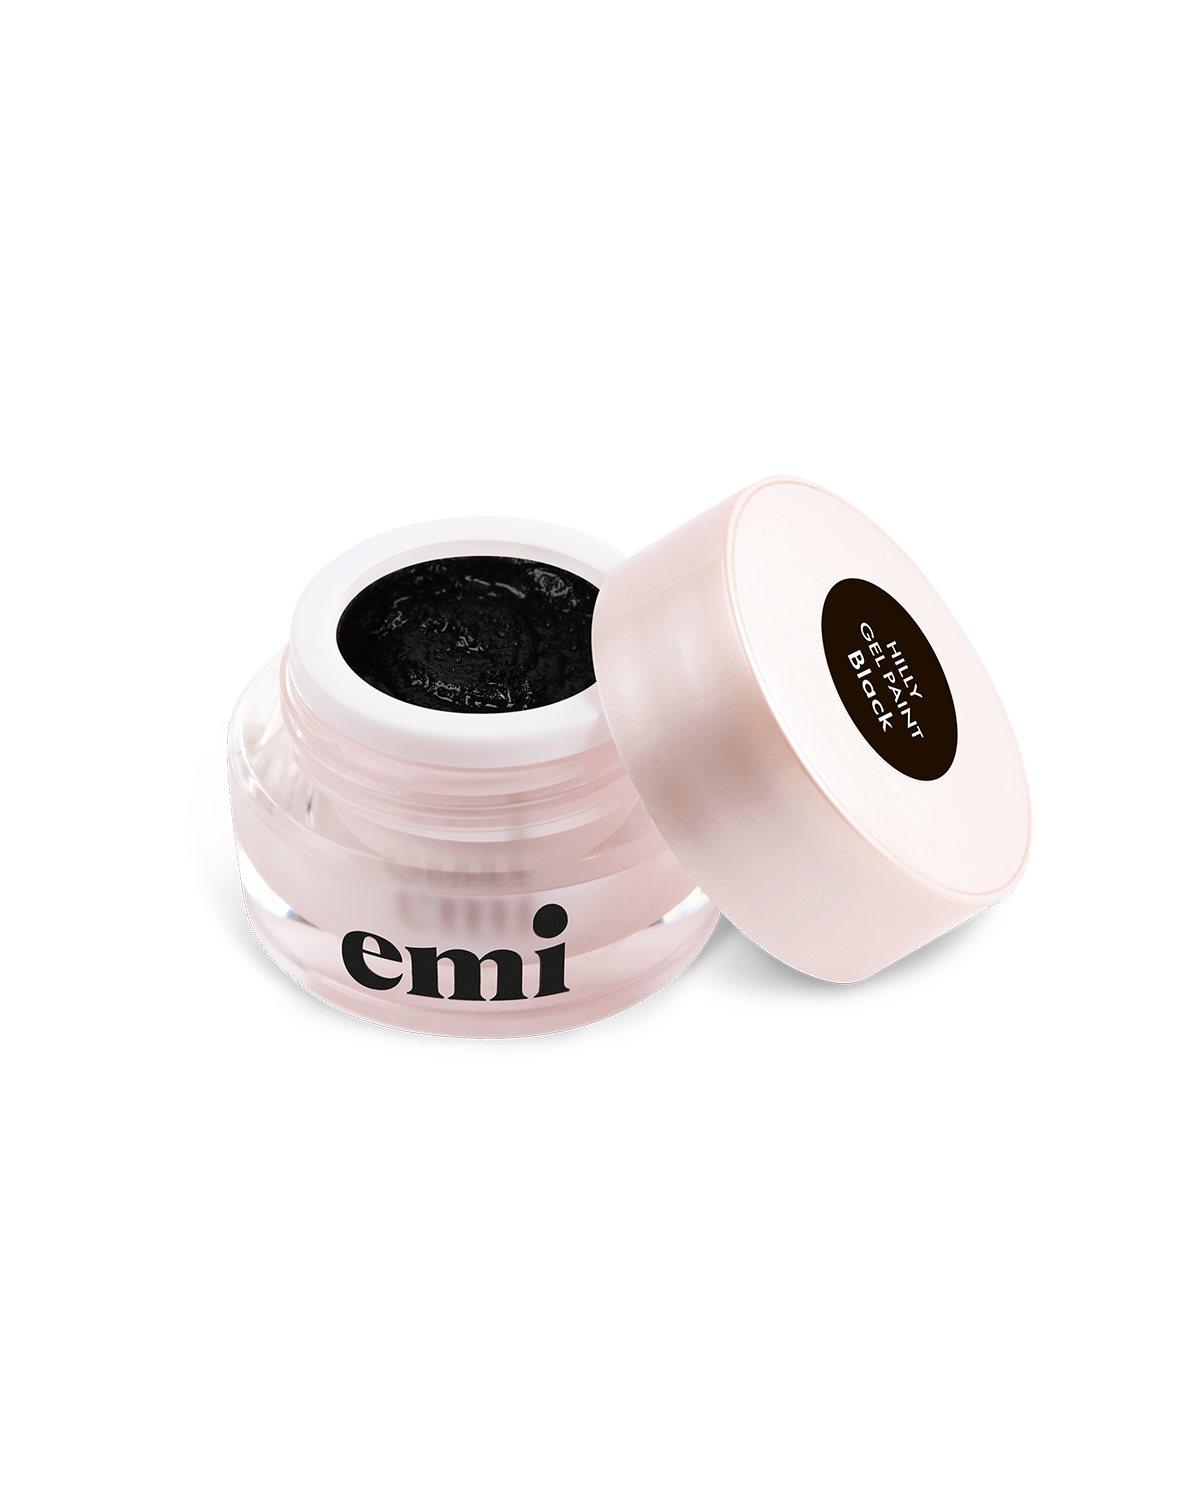 Гель для дизайна ногтей Emi Hilly gel paint №001 Black 5 г объемные наклейки для ногтей emi charmicon 3d silicone stickers 233 путешествия 2